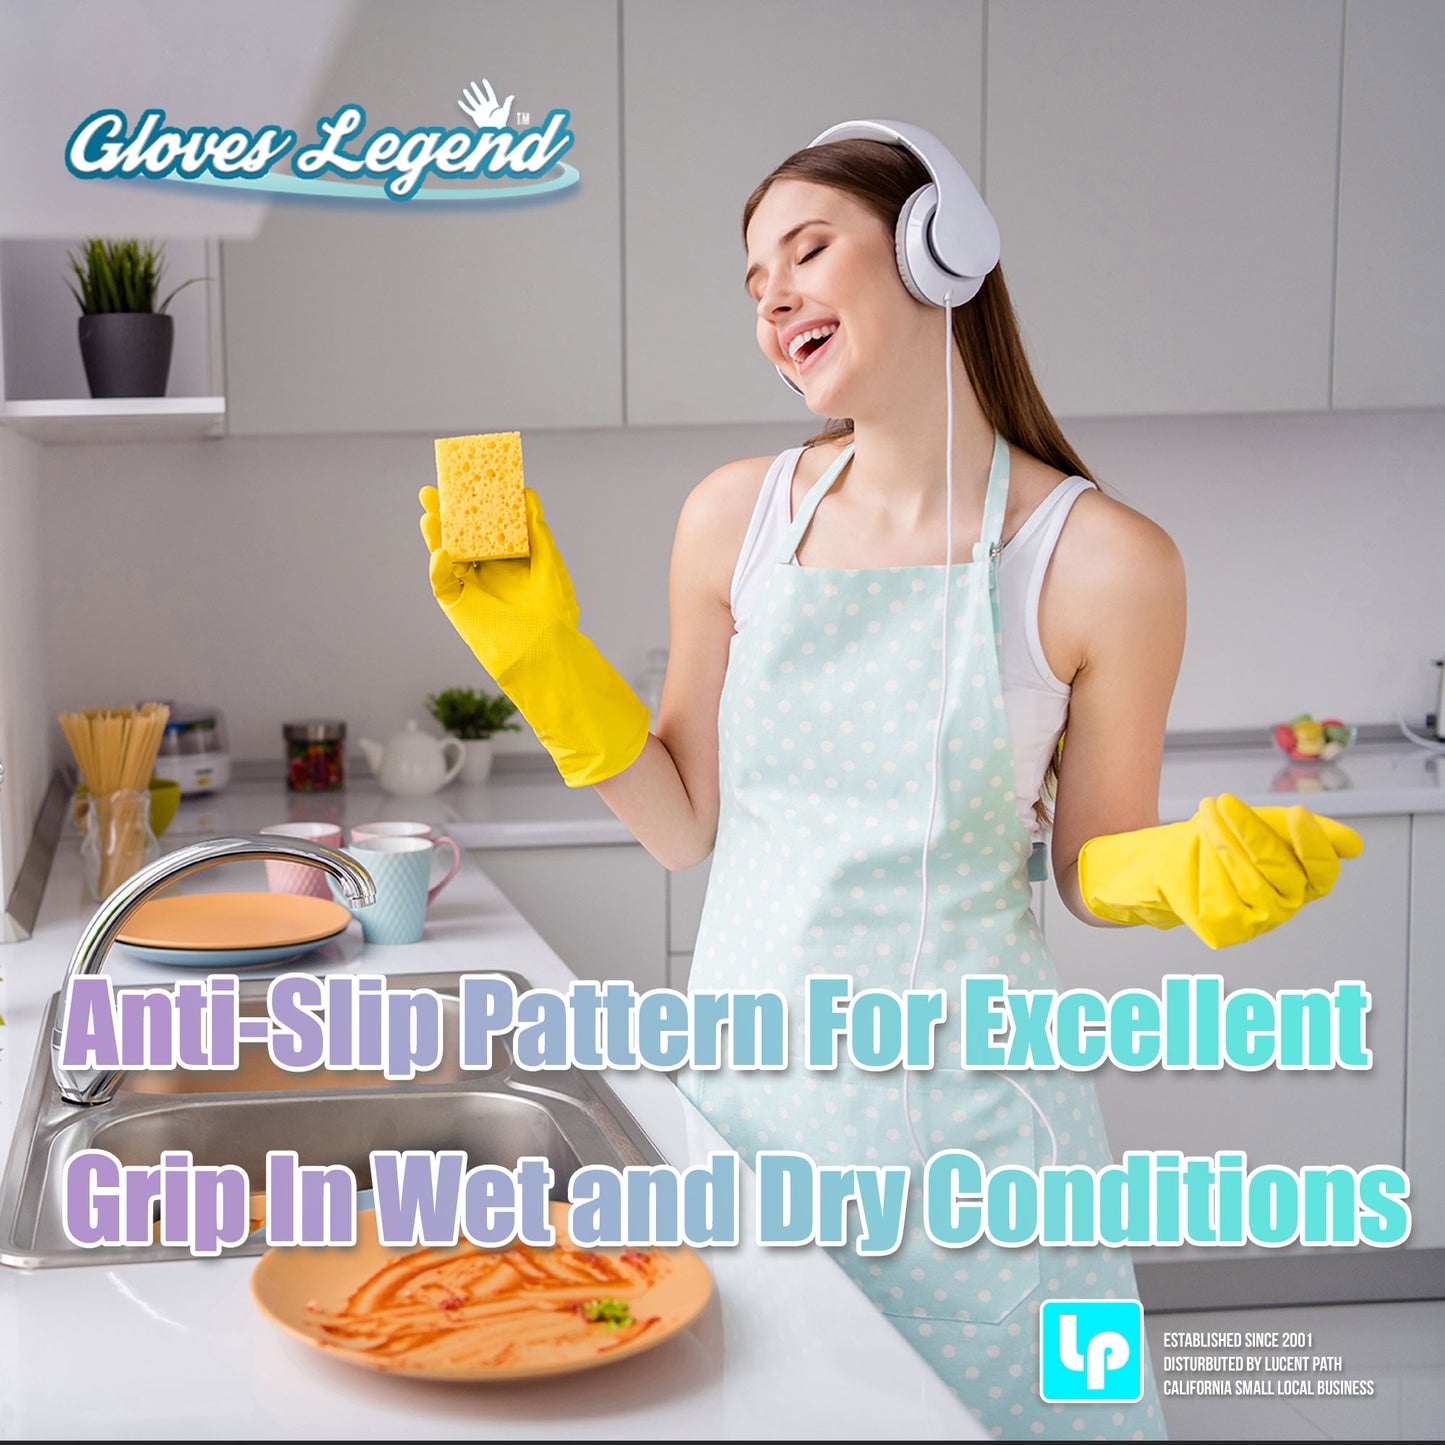 Medium - 6 Pairs (12 Gloves) Gloves Legend 12" Yellow Latex Household Kitchen Cleaning Dishwashing Gloves - 18 mil